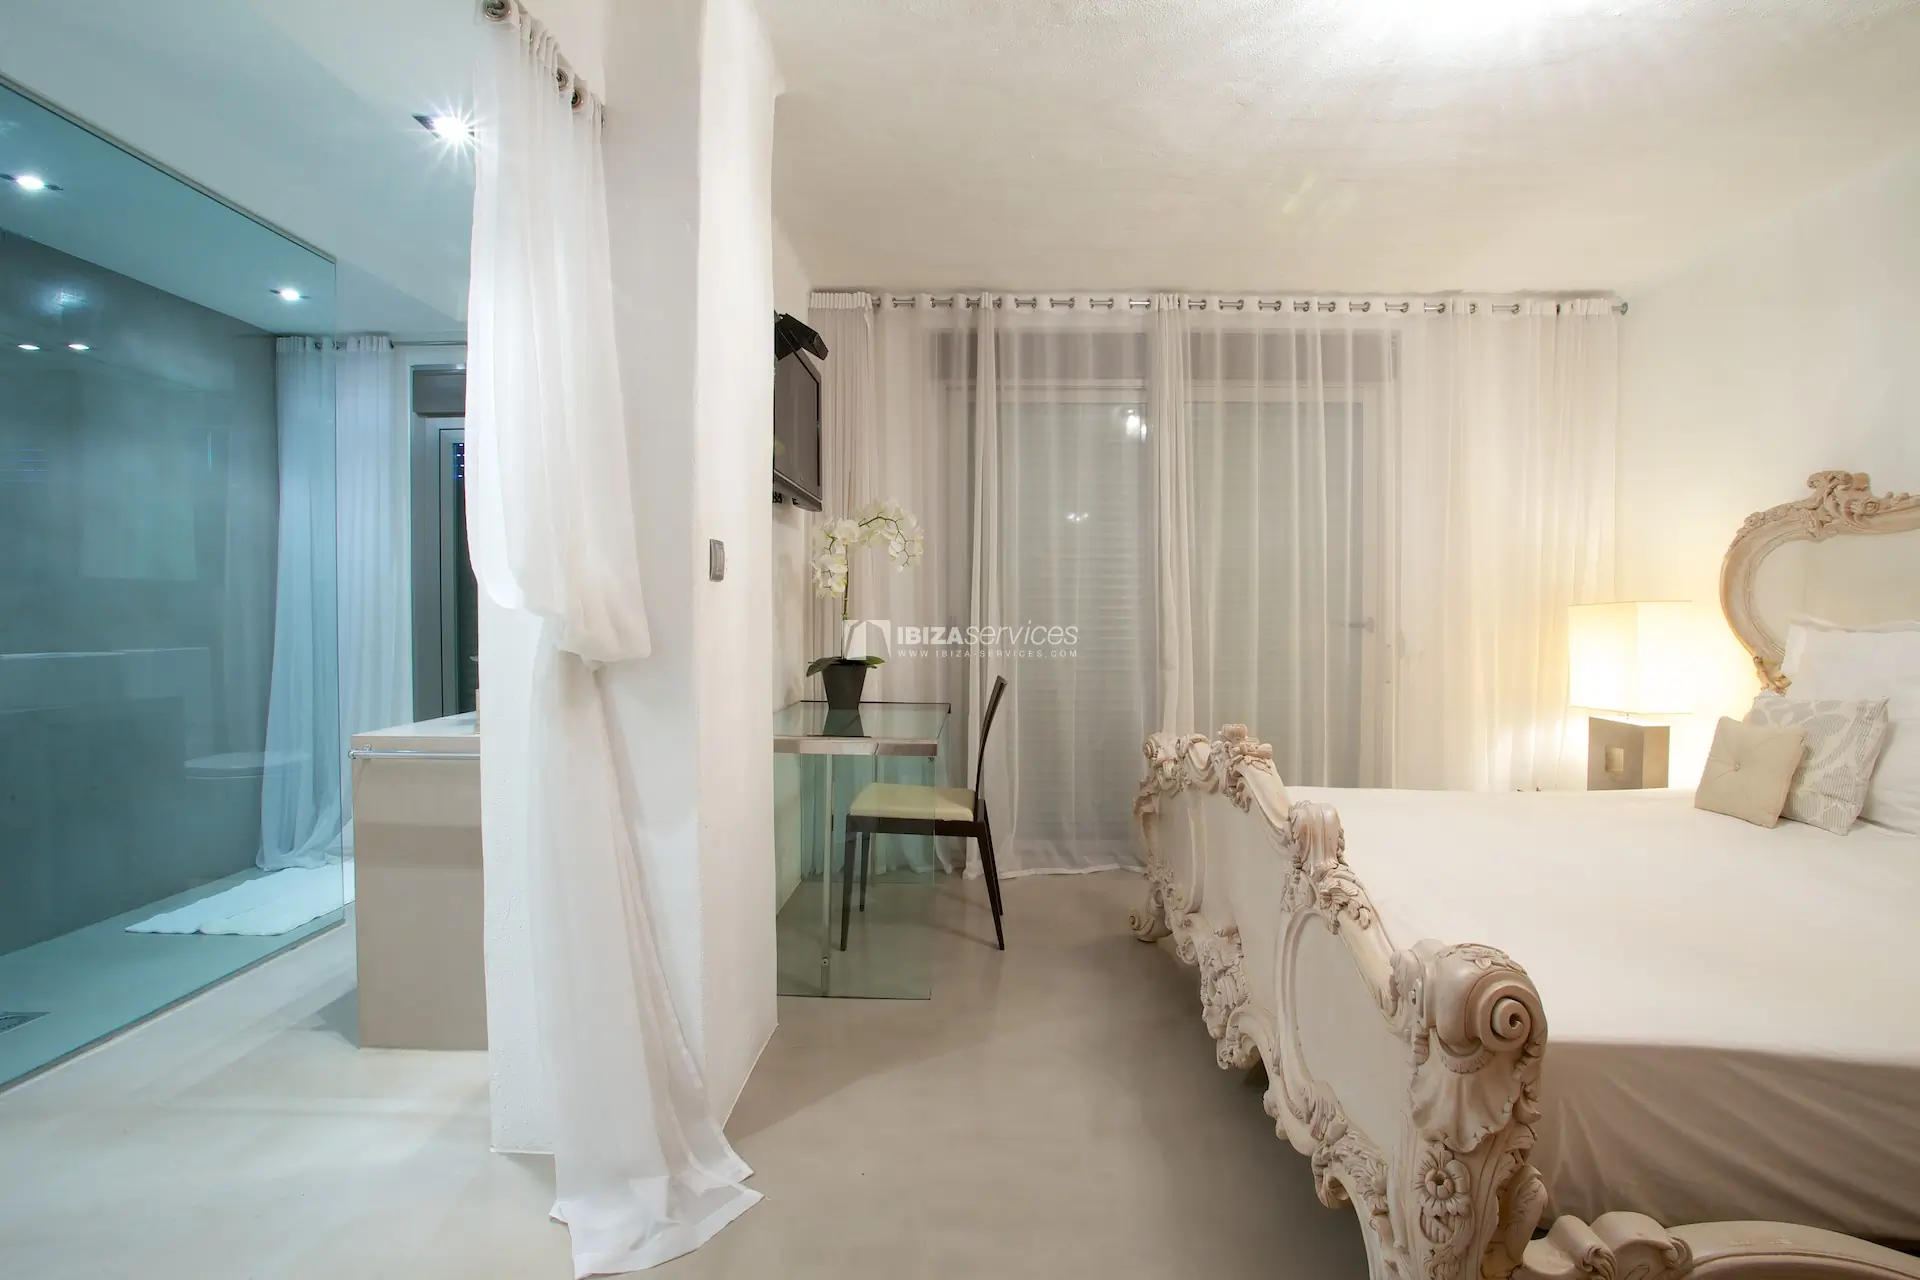 Luxury 9 bedroom villa for rent close to Ibiza